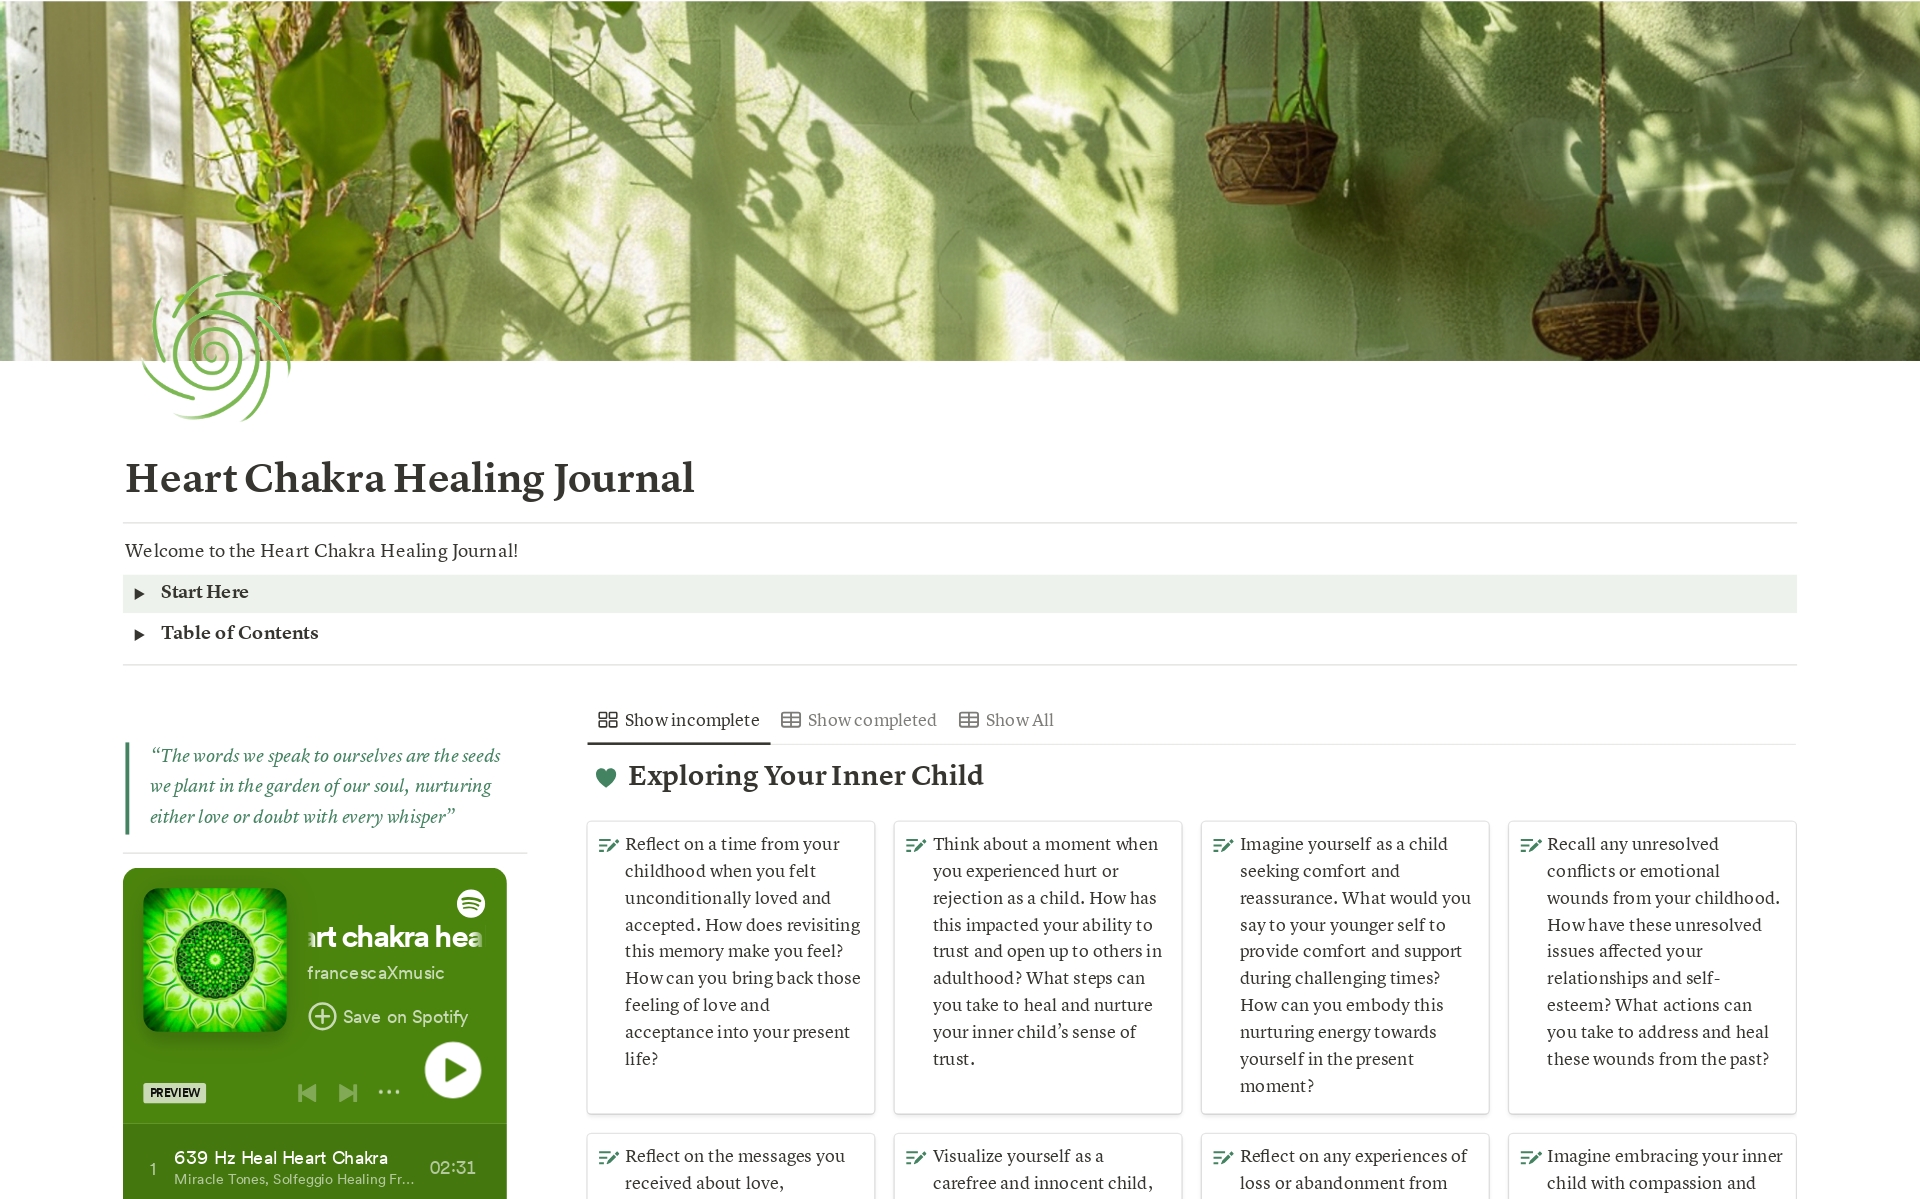 Vista previa de plantilla para Heart Chakra Healing Journal